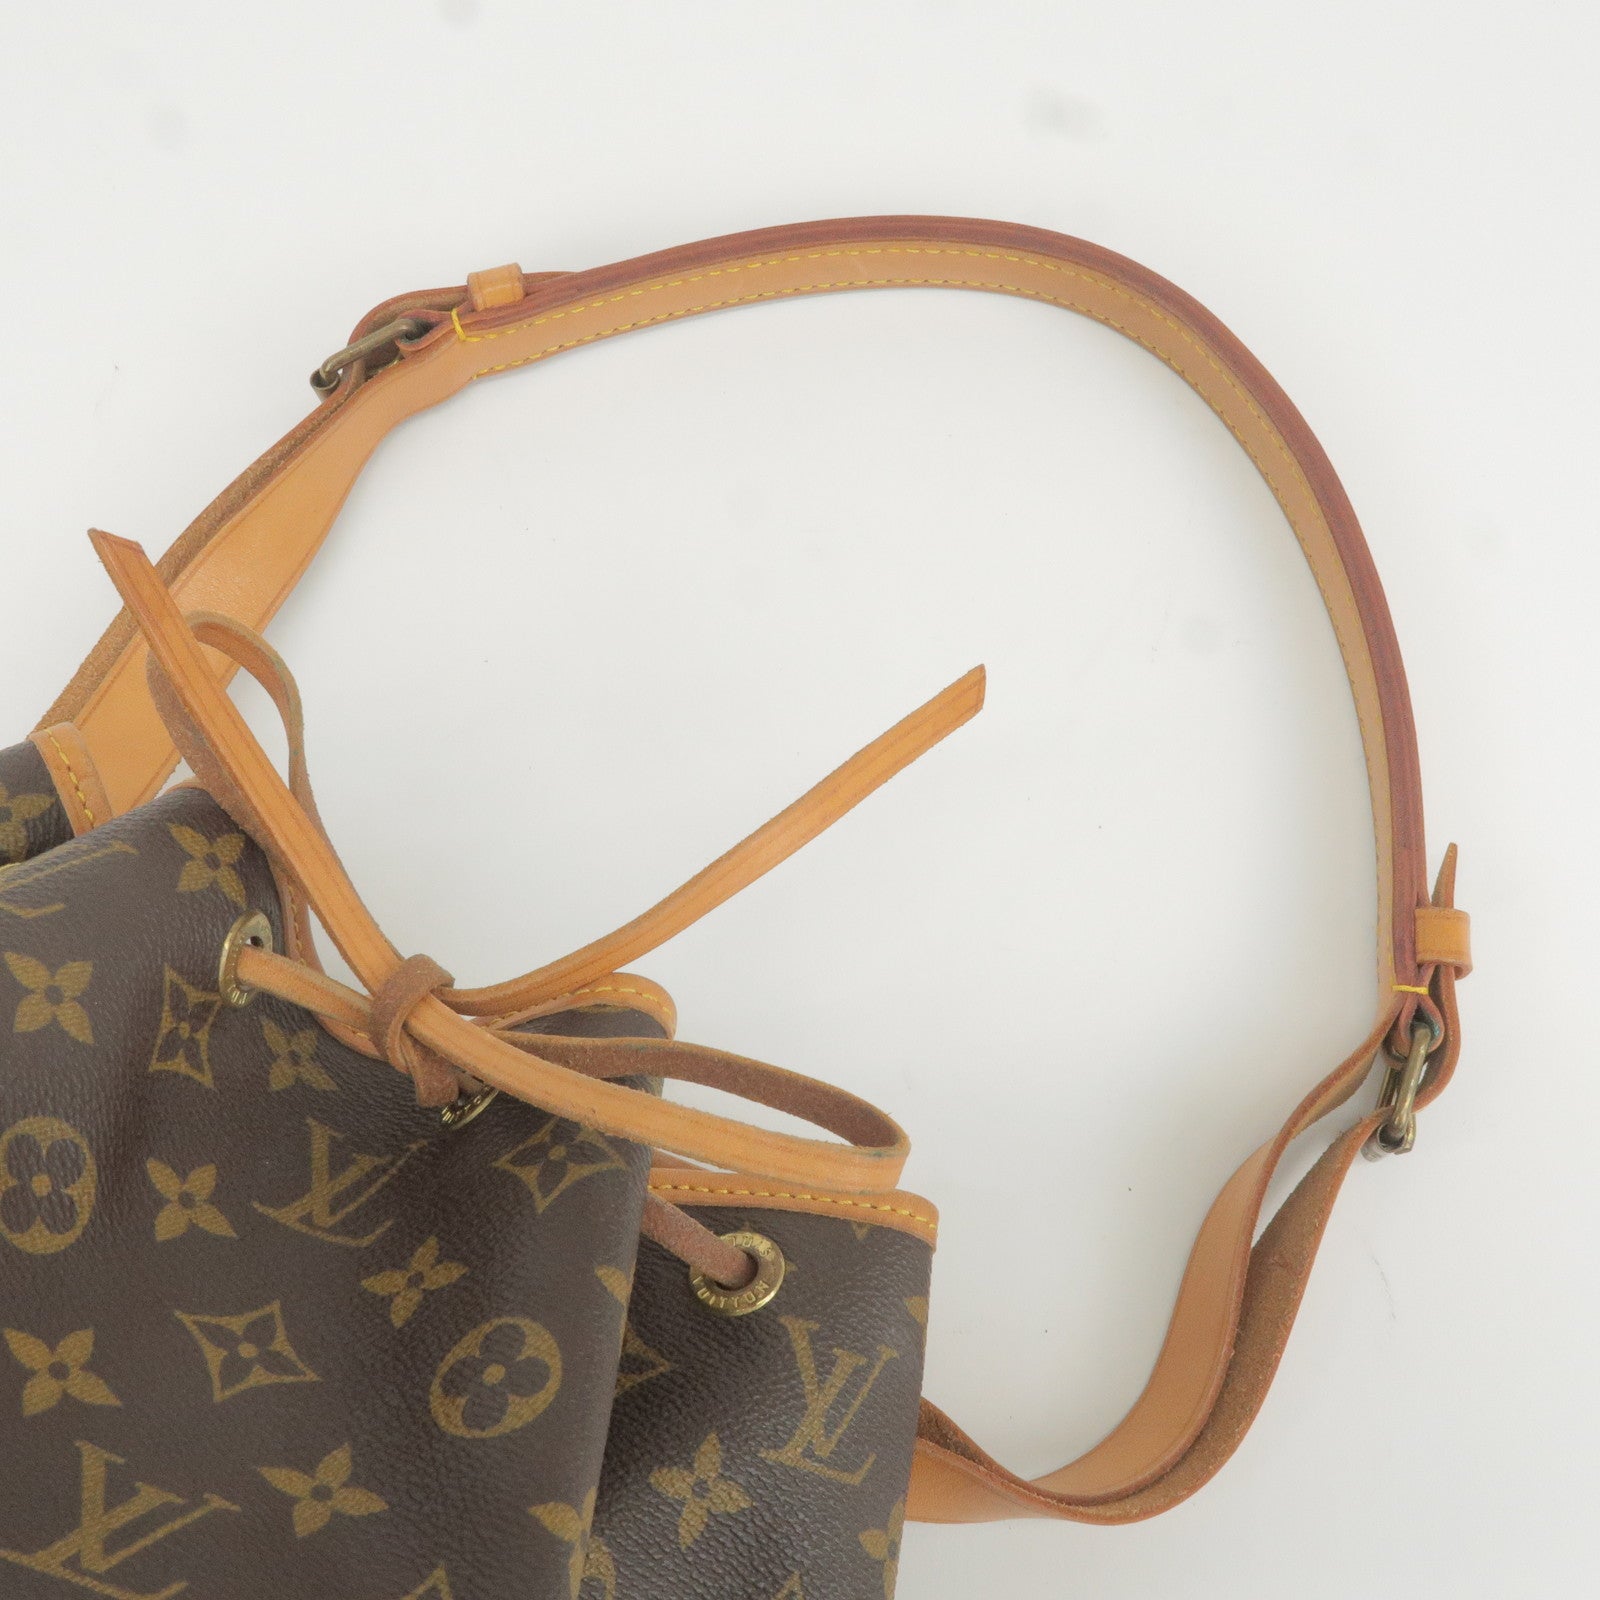 Louis Vuitton 2000s pre-owned Jeanne GM crossbody bag - Vuitton